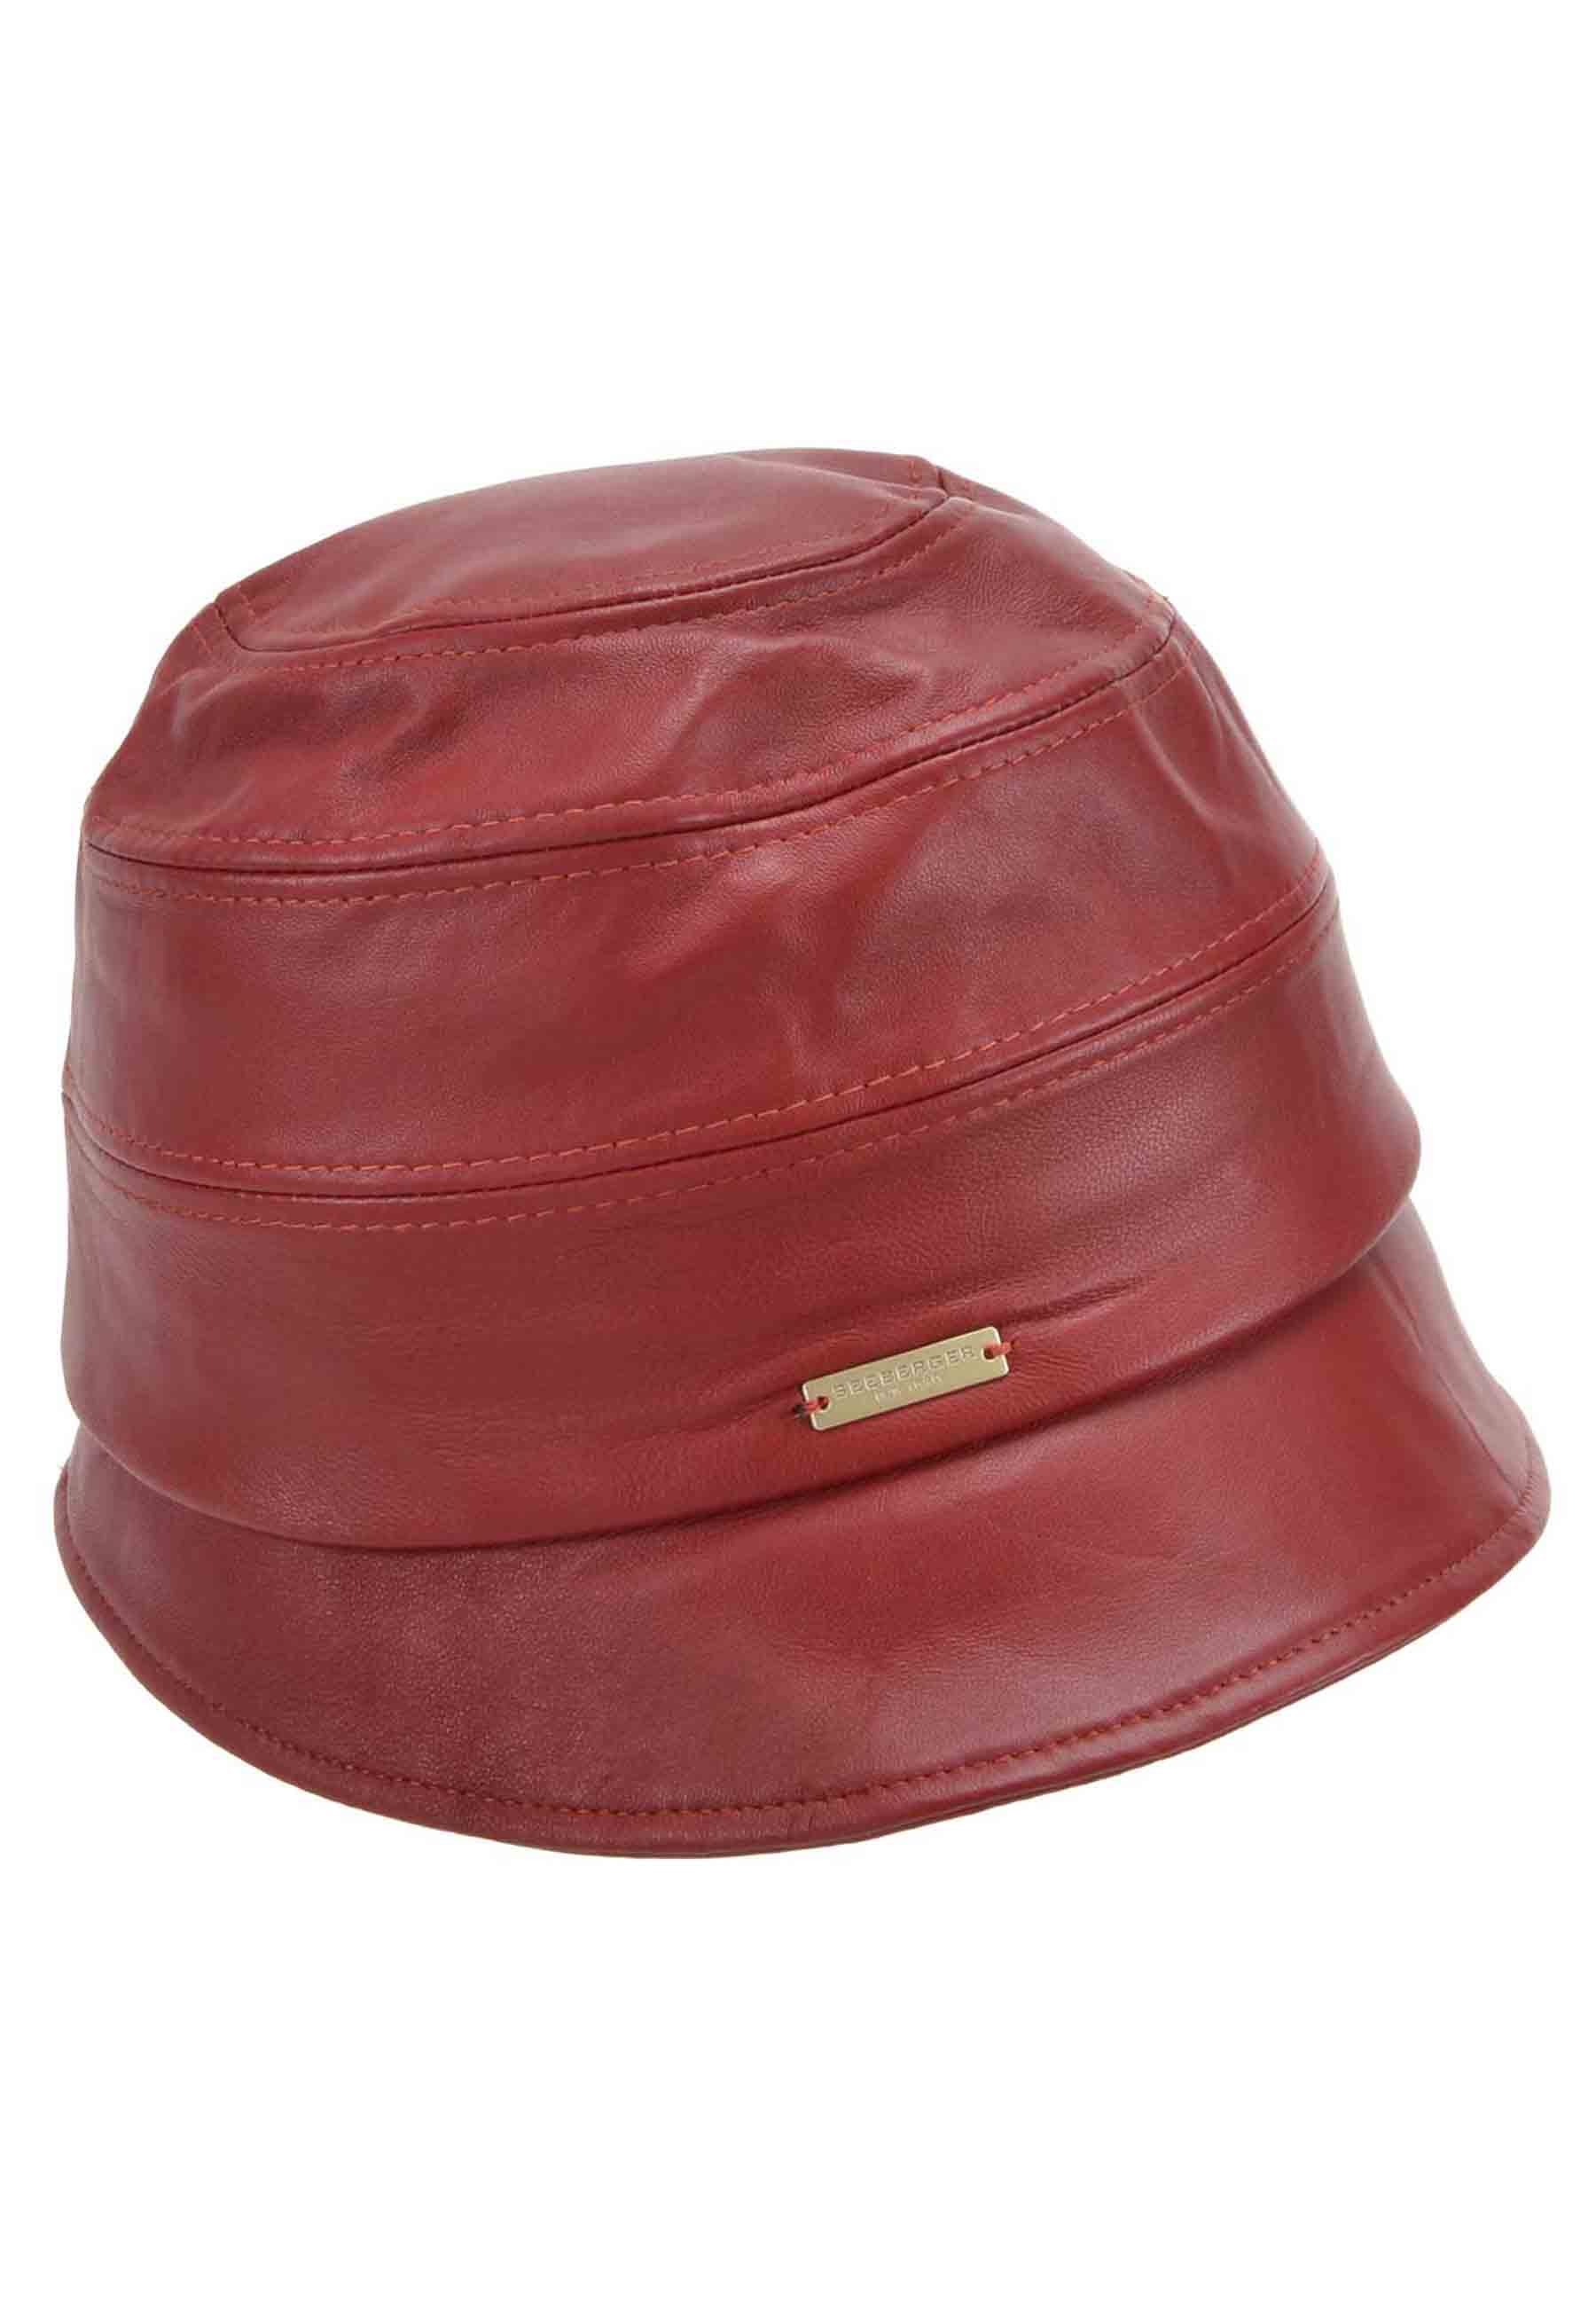 Women's cloche hat in burgundy leather